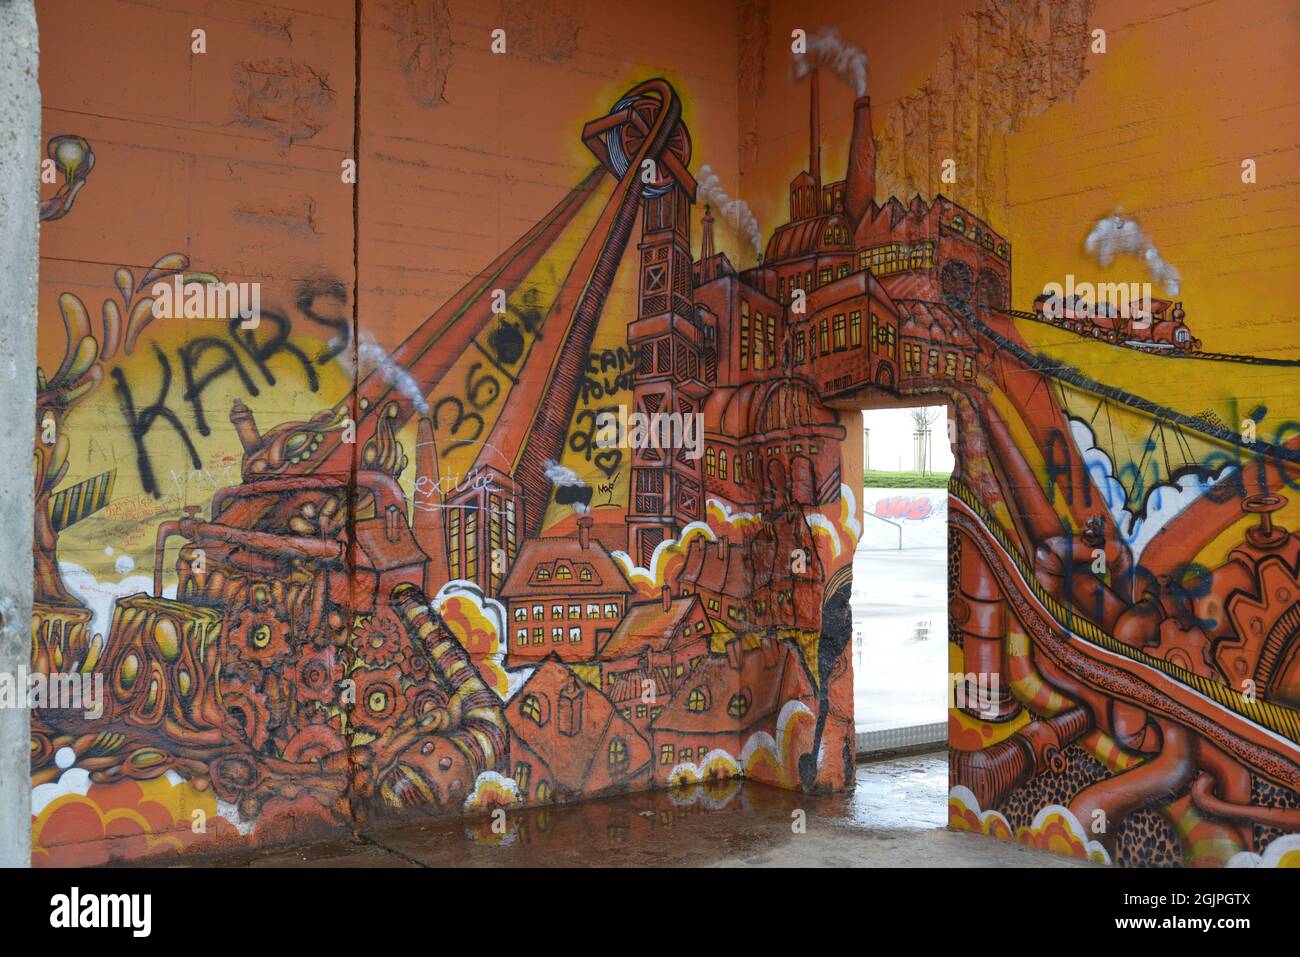 DUISBURG, GERMANIA - Feb 02, 2013: Una vista di un bellissimo graffiti sul muro a Rheinpark, Duisburg, Germania Foto Stock